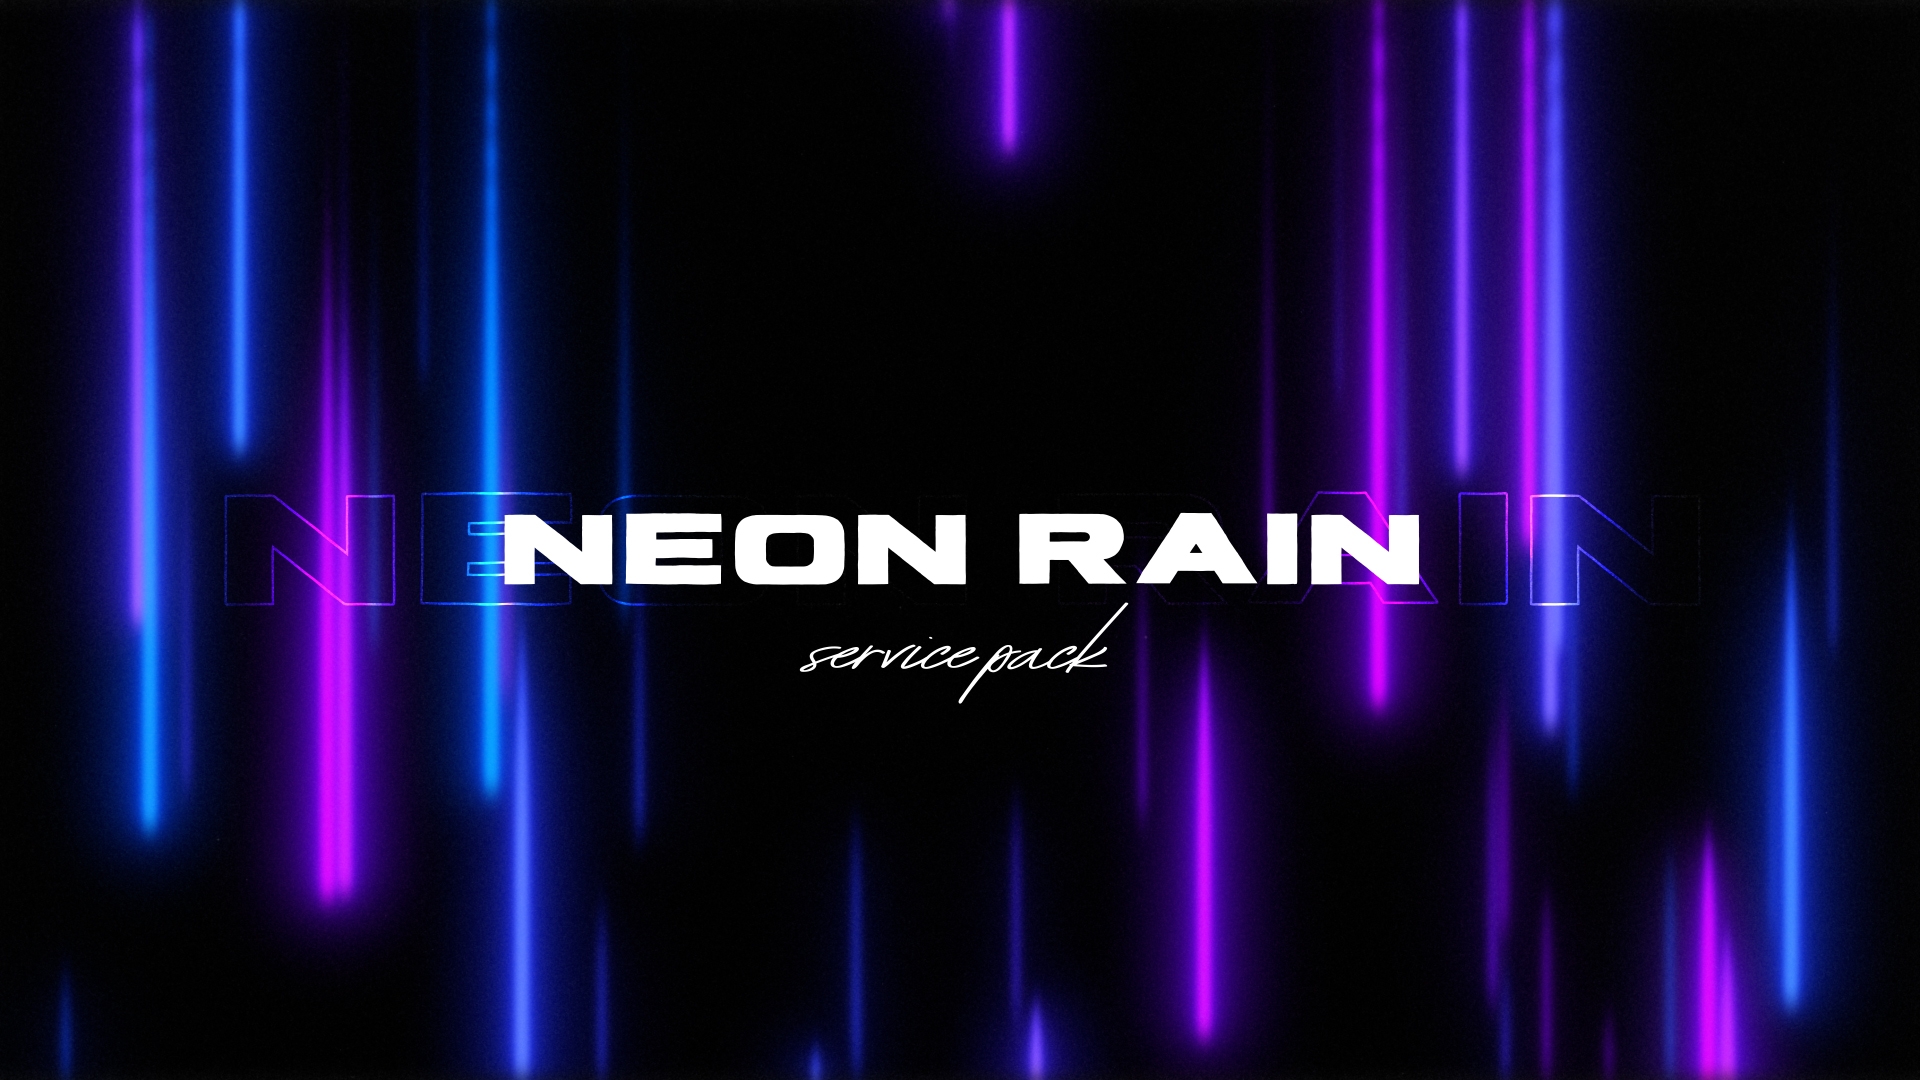 Neon Rain Service Pack